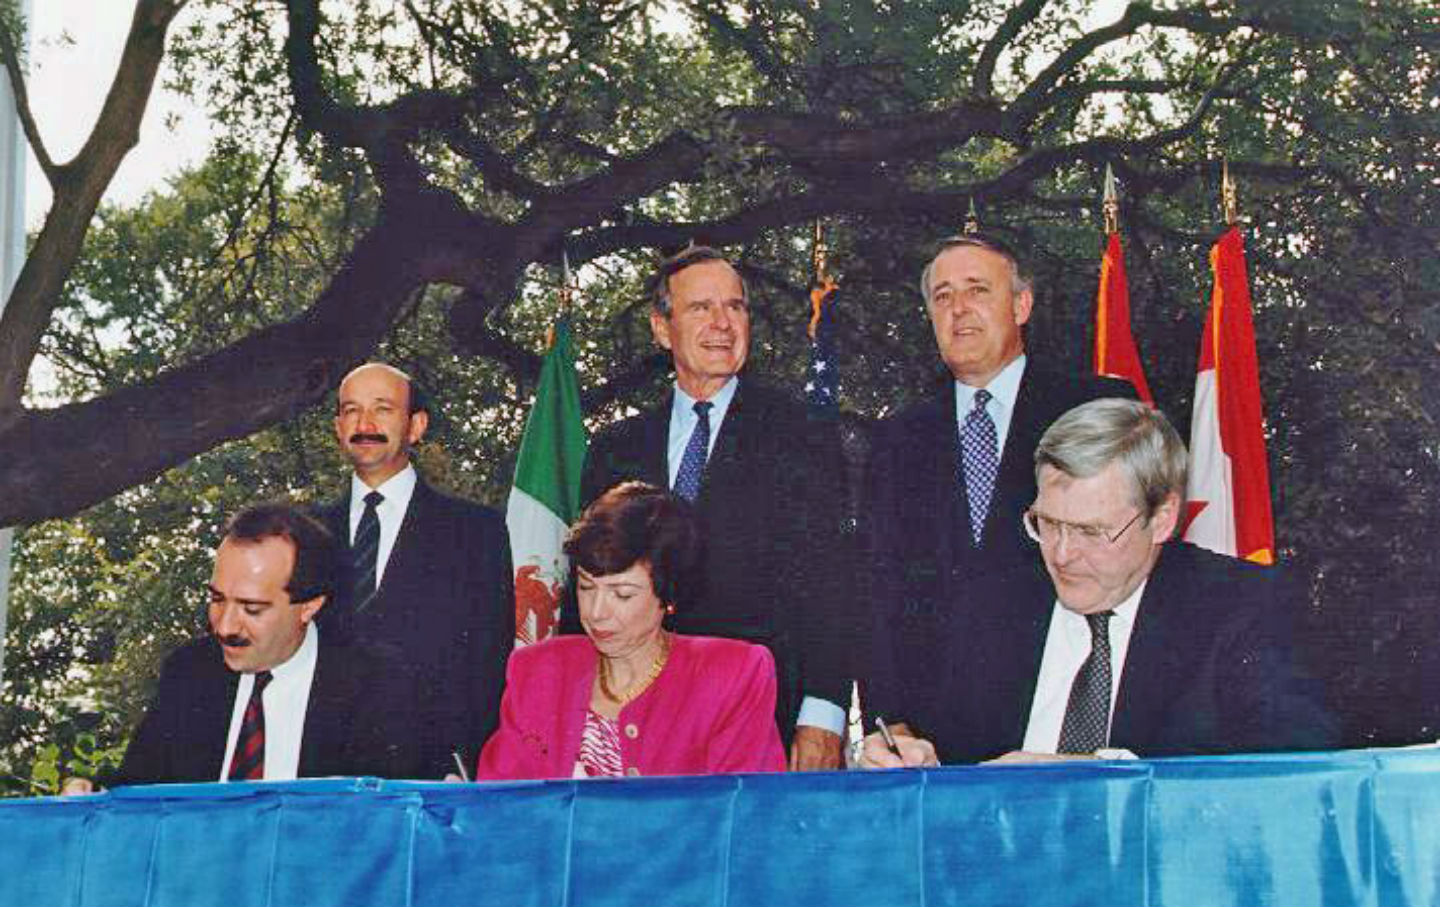 November 17, 1993: The US House of Representatives Approves NAFTA